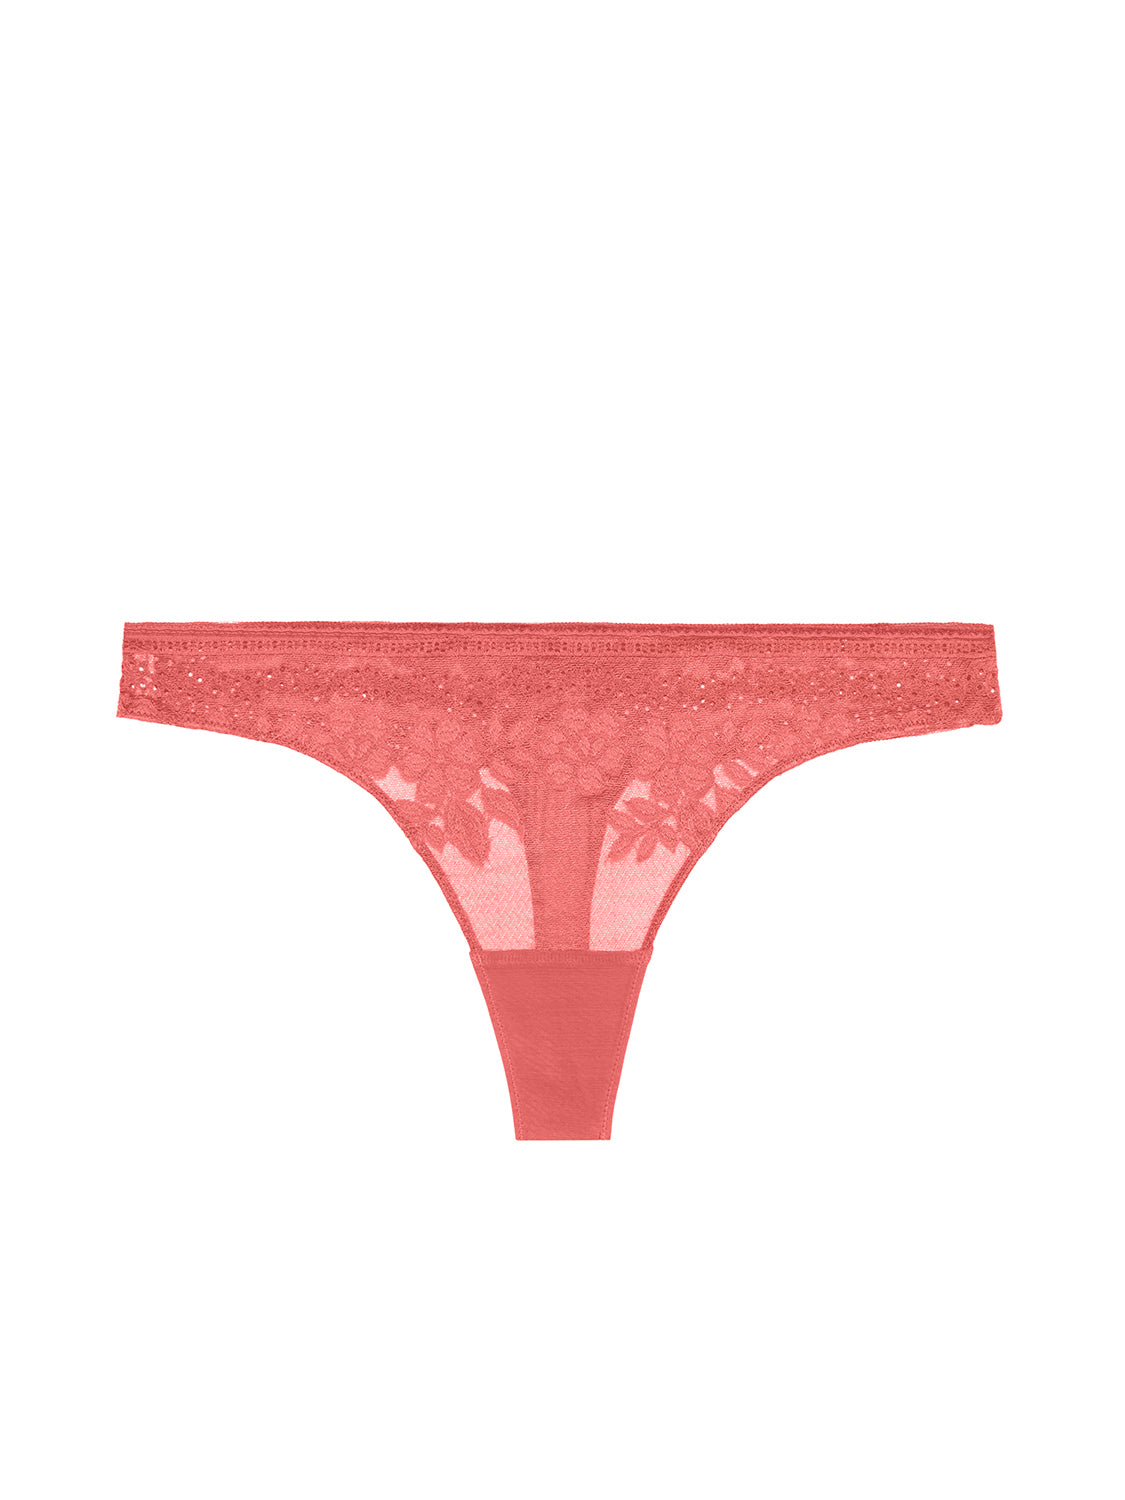 Underwear set - absolute comfort - bralette + pink tanga